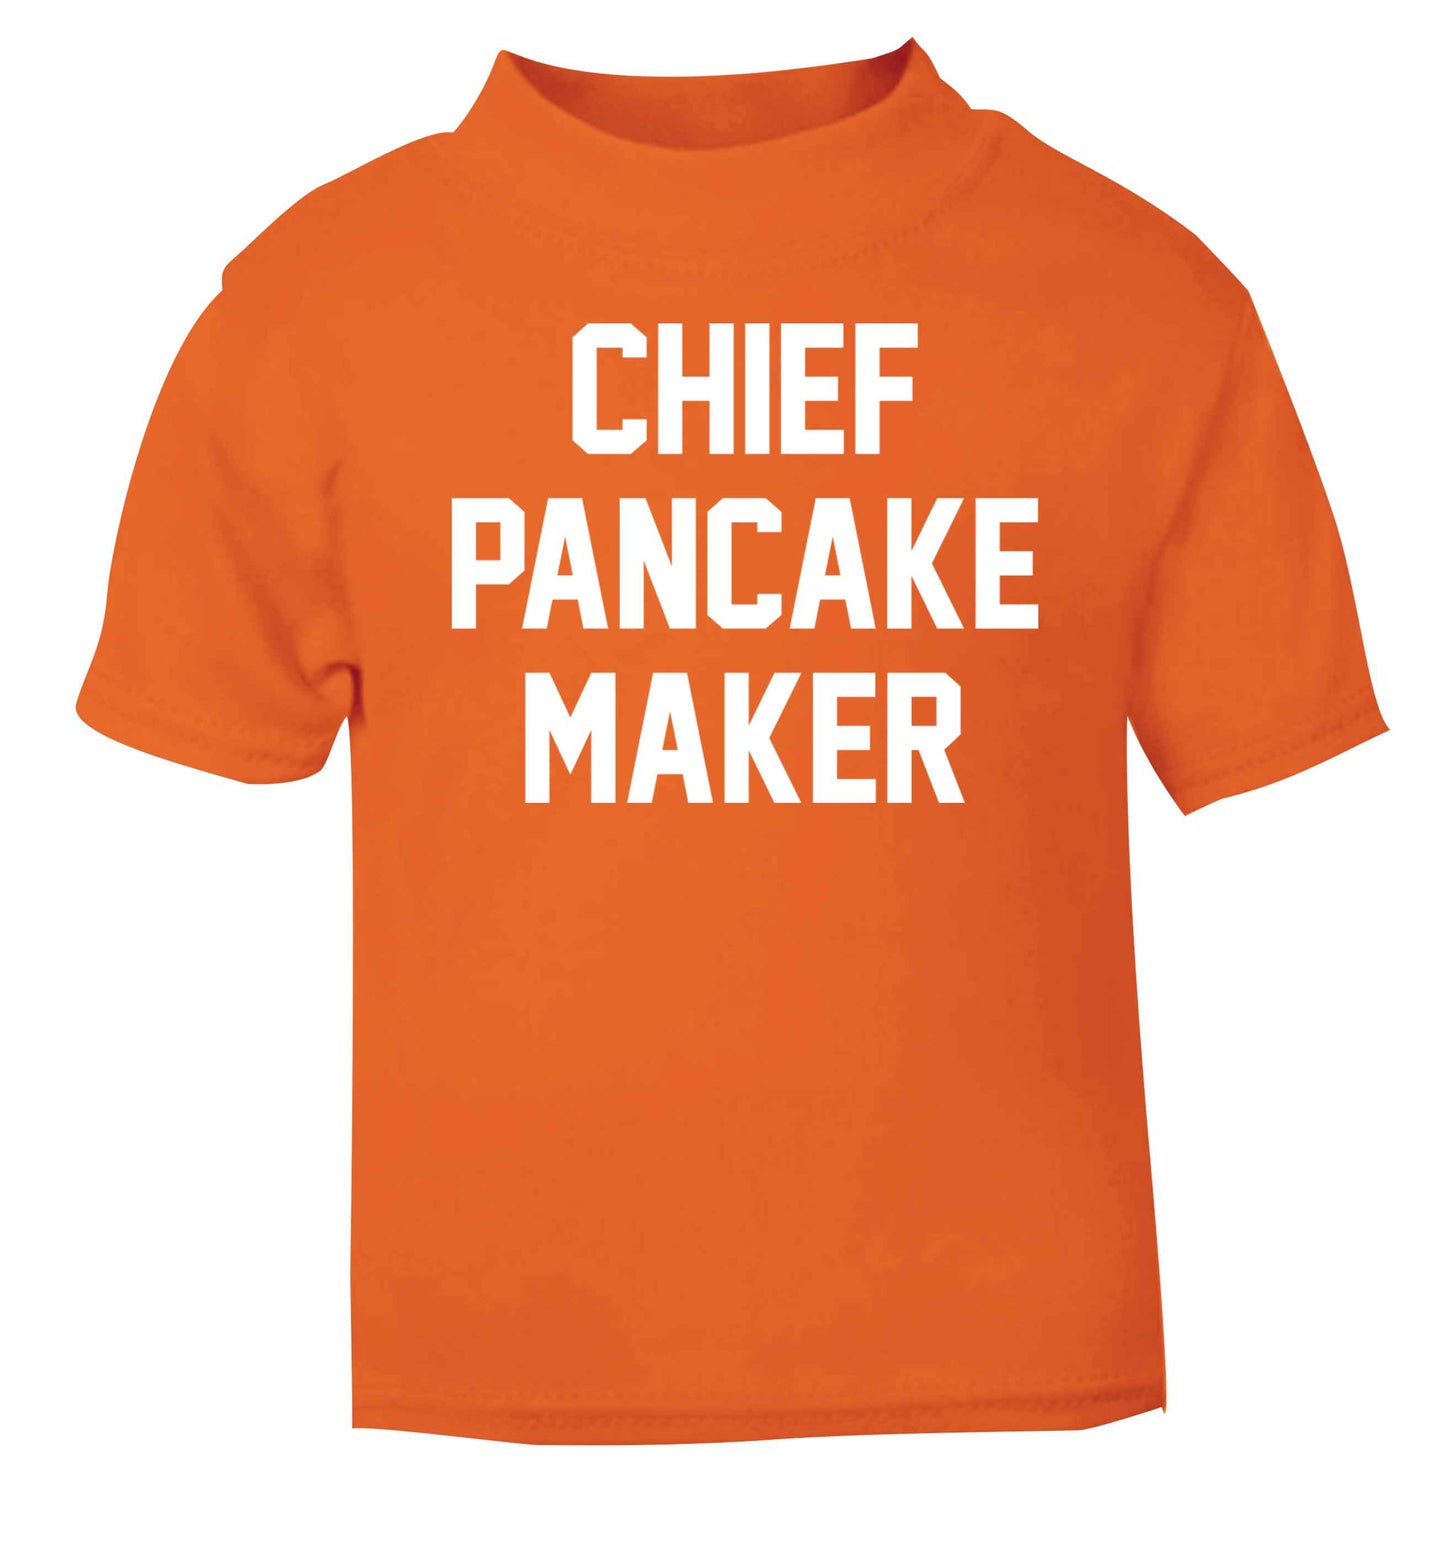 Chief pancake maker orange baby toddler Tshirt 2 Years